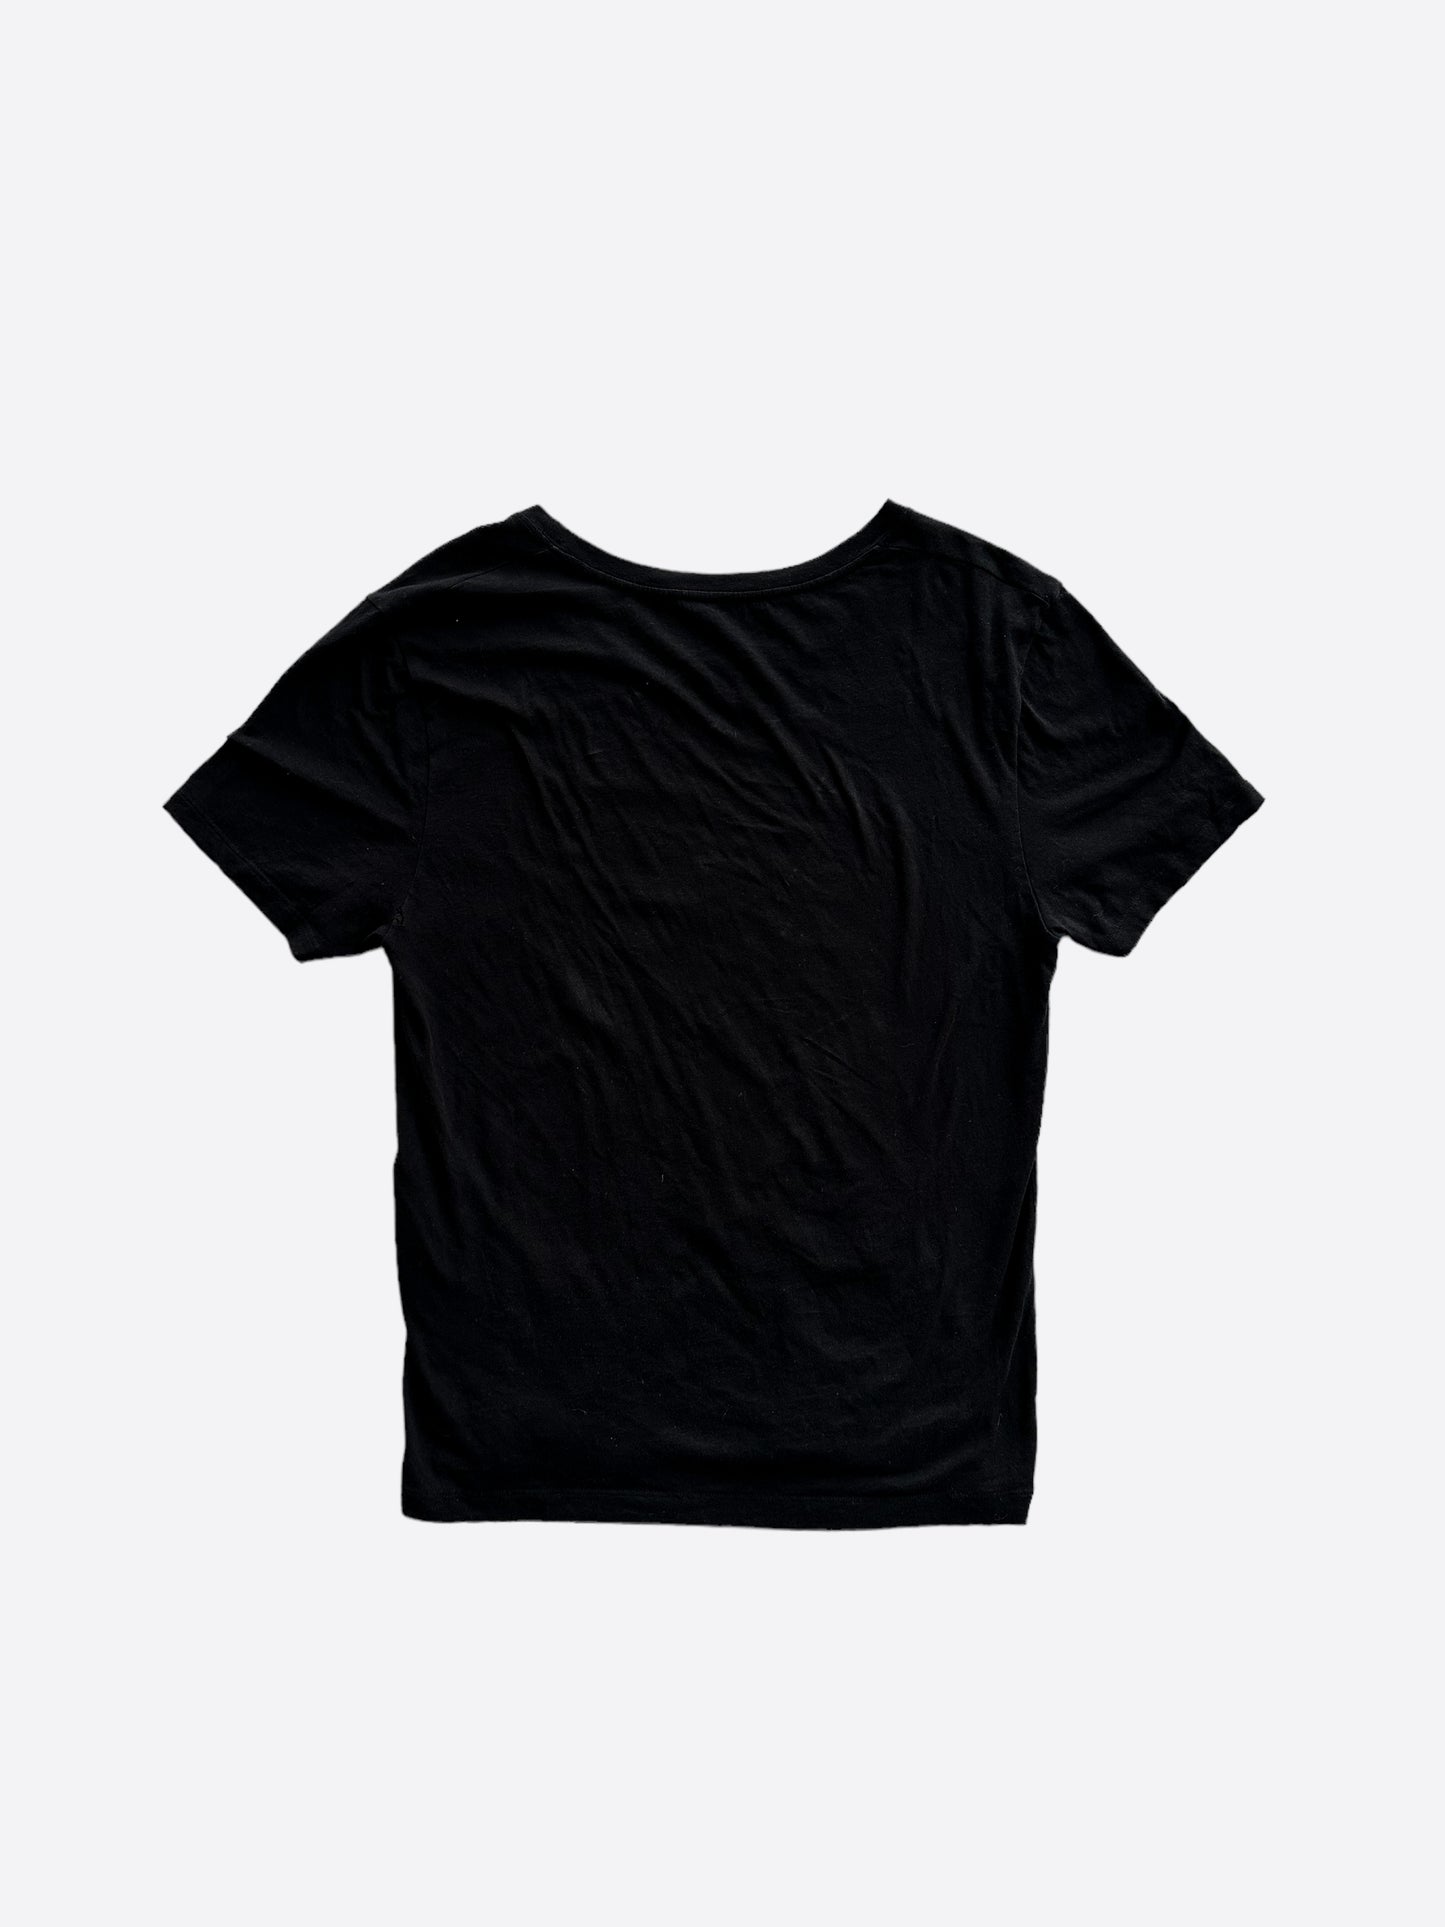 Gucci Black Belt Logo T-Shirt